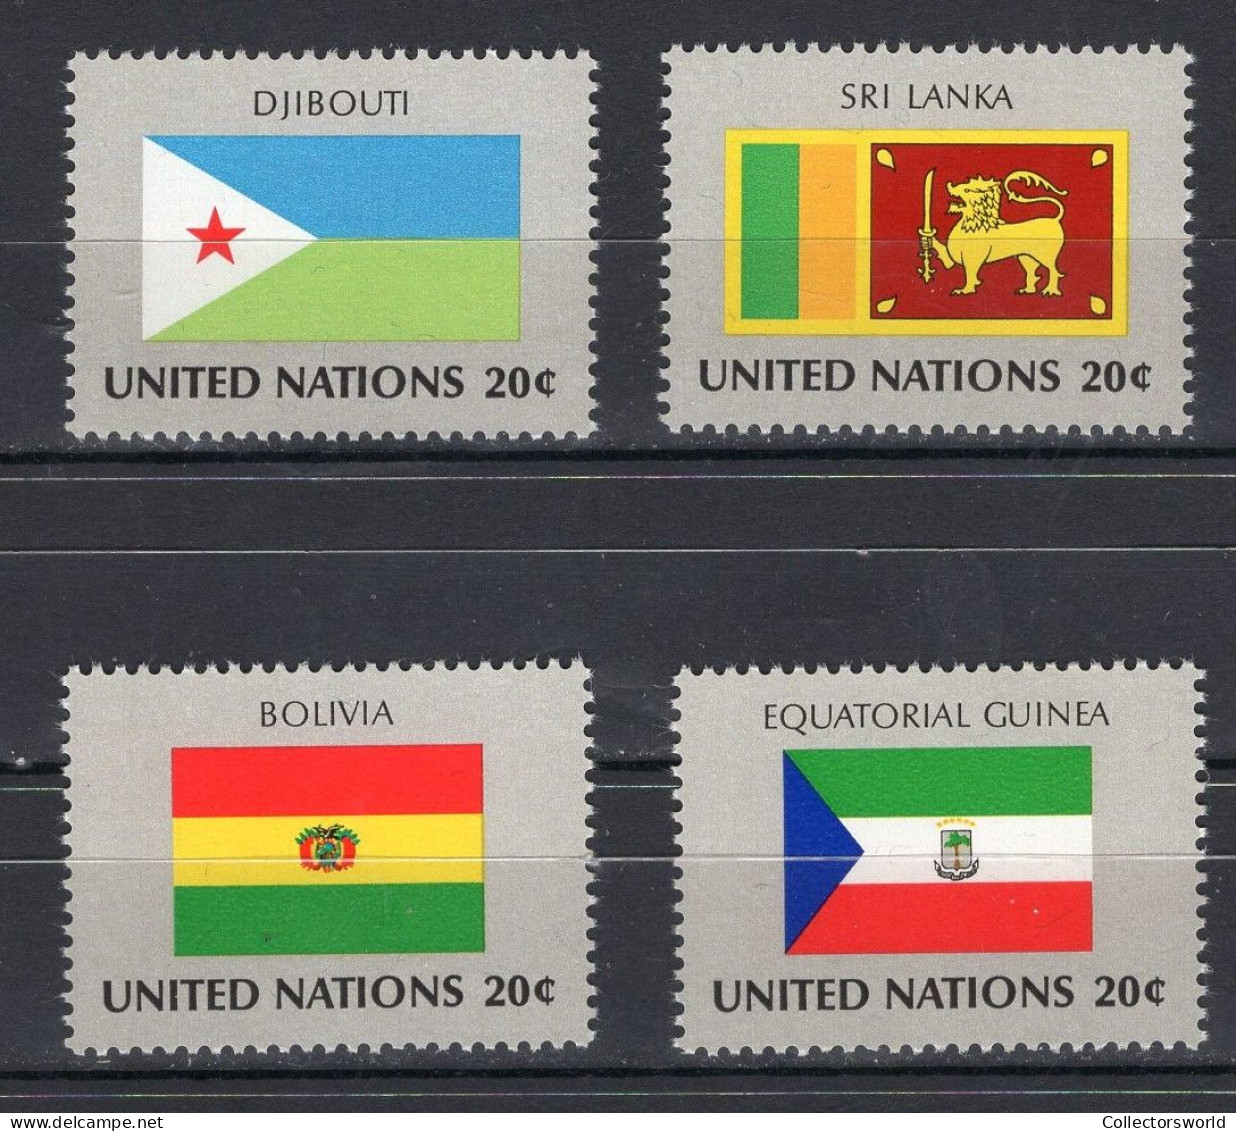 United Nations UN New York Serie 4v 1981 Flag Serie Sri Lanka Djibouti Bolivia Equatorial Guinea MNH - Ongebruikt